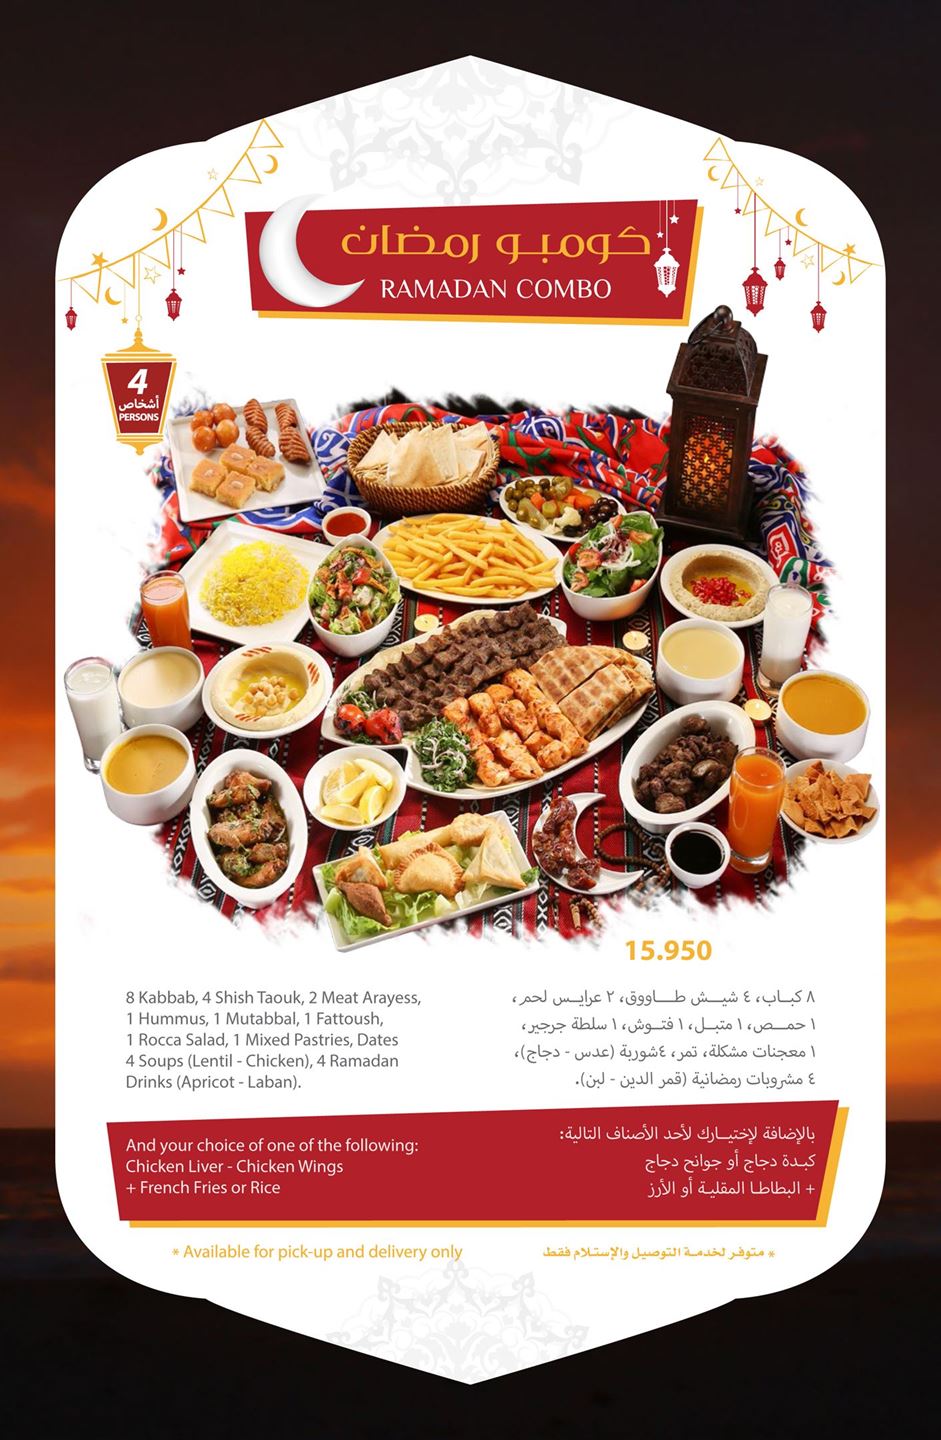 Offers and Buffets of Kuwait Restaurants - Ramadan 2017